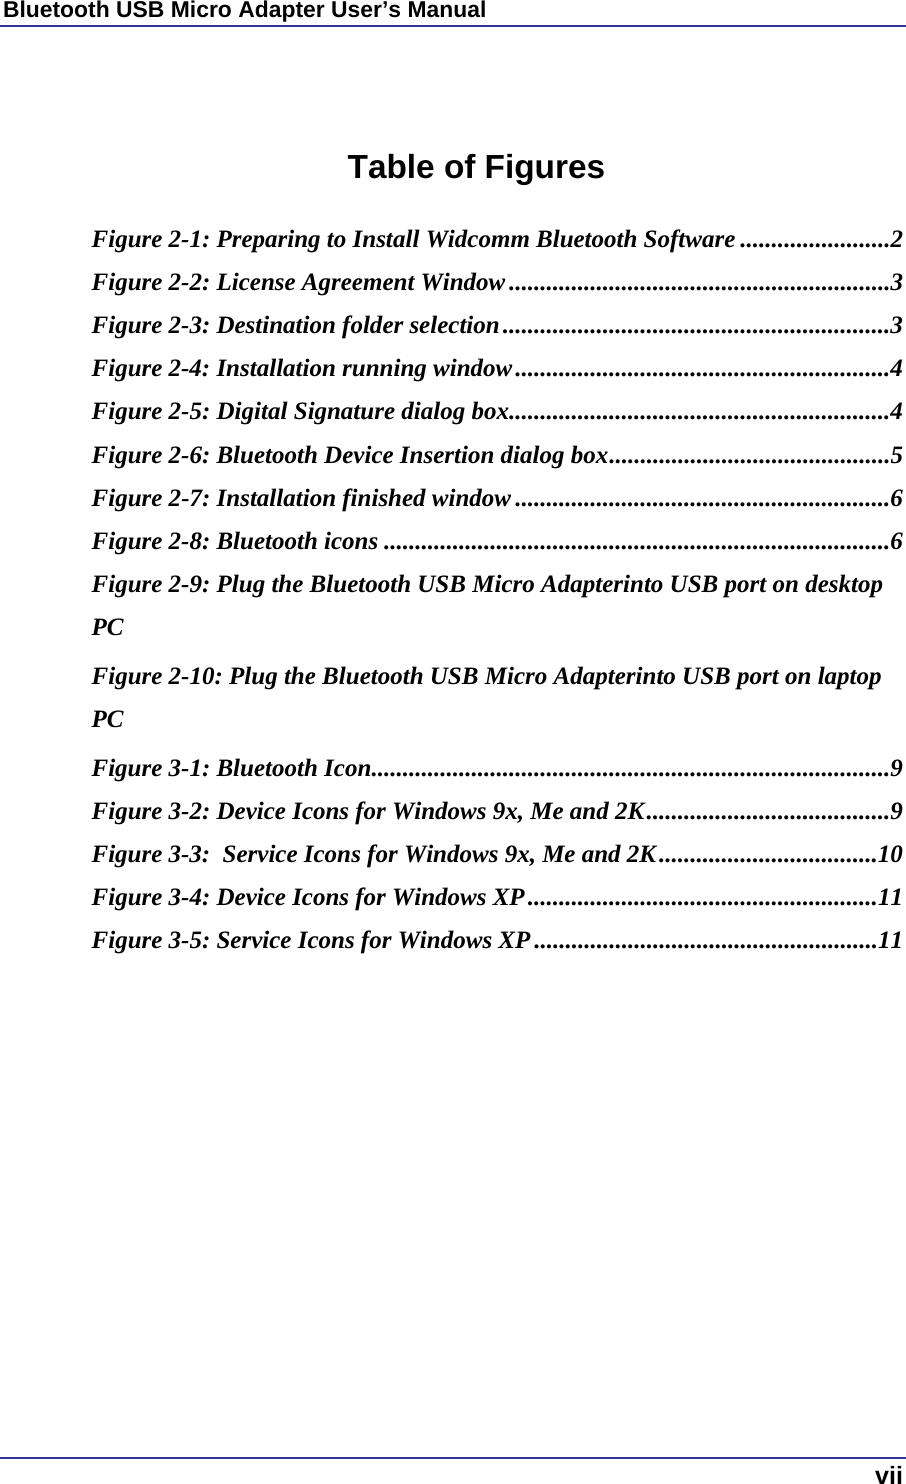 Bluetooth USB Micro Adapter User’s Manual  vii   Table of Figures  Figure 2-1: Preparing to Install Widcomm Bluetooth Software ........................2 Figure 2-2: License Agreement Window.............................................................3 Figure 2-3: Destination folder selection..............................................................3 Figure 2-4: Installation running window............................................................4 Figure 2-5: Digital Signature dialog box.............................................................4 Figure 2-6: Bluetooth Device Insertion dialog box.............................................5 Figure 2-7: Installation finished window ............................................................6 Figure 2-8: Bluetooth icons .................................................................................6 Figure 2-9: Plug the Bluetooth USB Micro Adapterinto USB port on desktop PCFigure 2-10: Plug the Bluetooth USB Micro Adapterinto USB port on laptop PC Figure 3-1: Bluetooth Icon...................................................................................9 Figure 3-2: Device Icons for Windows 9x, Me and 2K.......................................9 Figure 3-3:  Service Icons for Windows 9x, Me and 2K...................................10 Figure 3-4: Device Icons for Windows XP........................................................11 Figure 3-5: Service Icons for Windows XP.......................................................11   